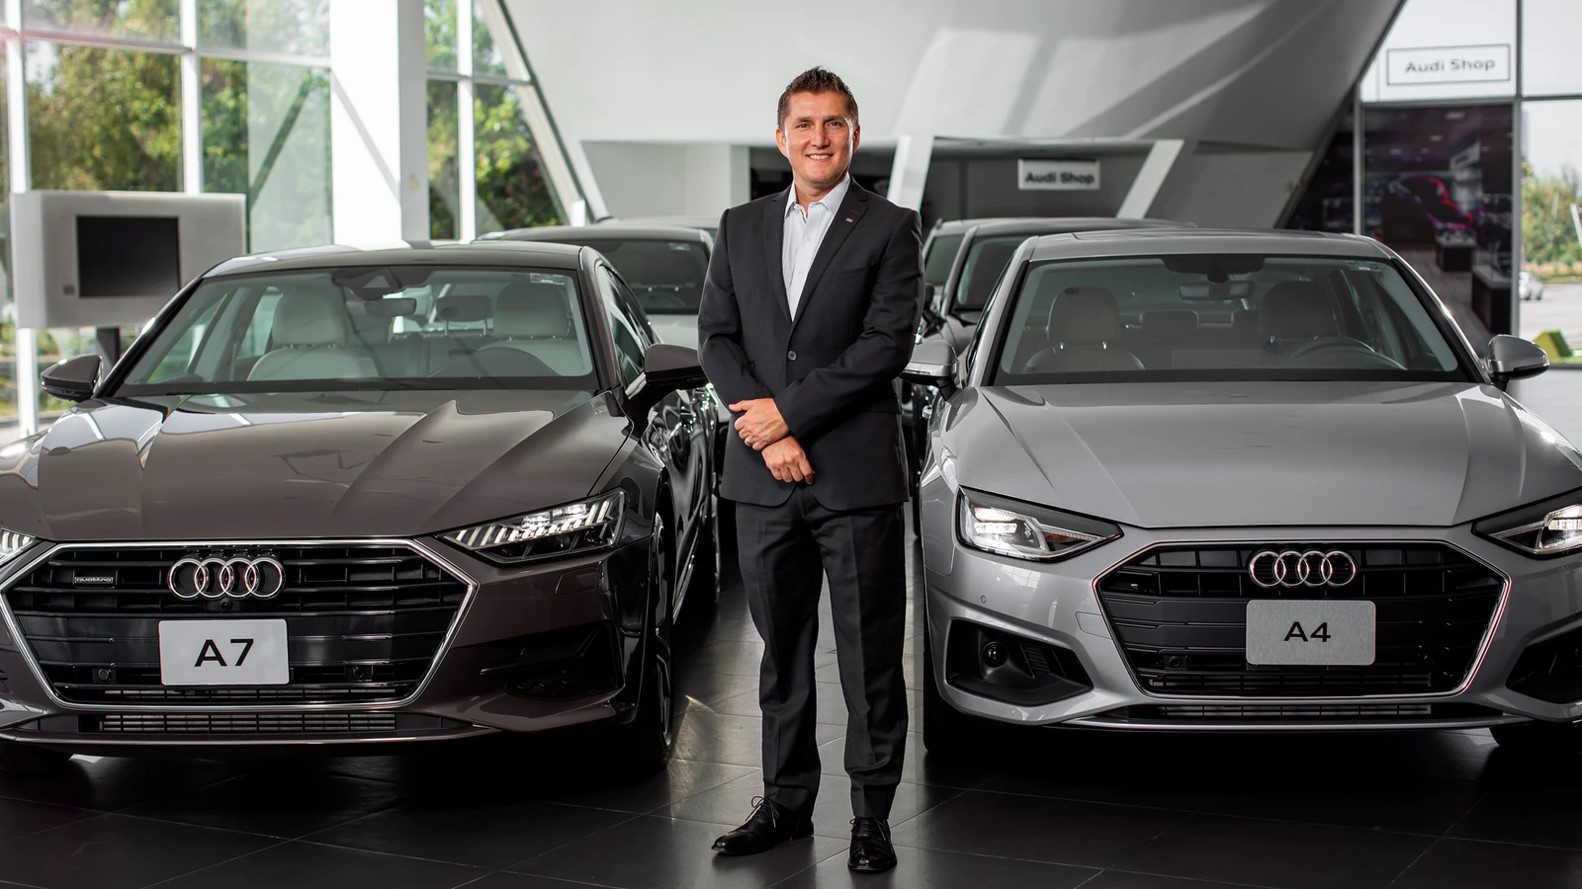 Audi celebrates 25 years in Mexico